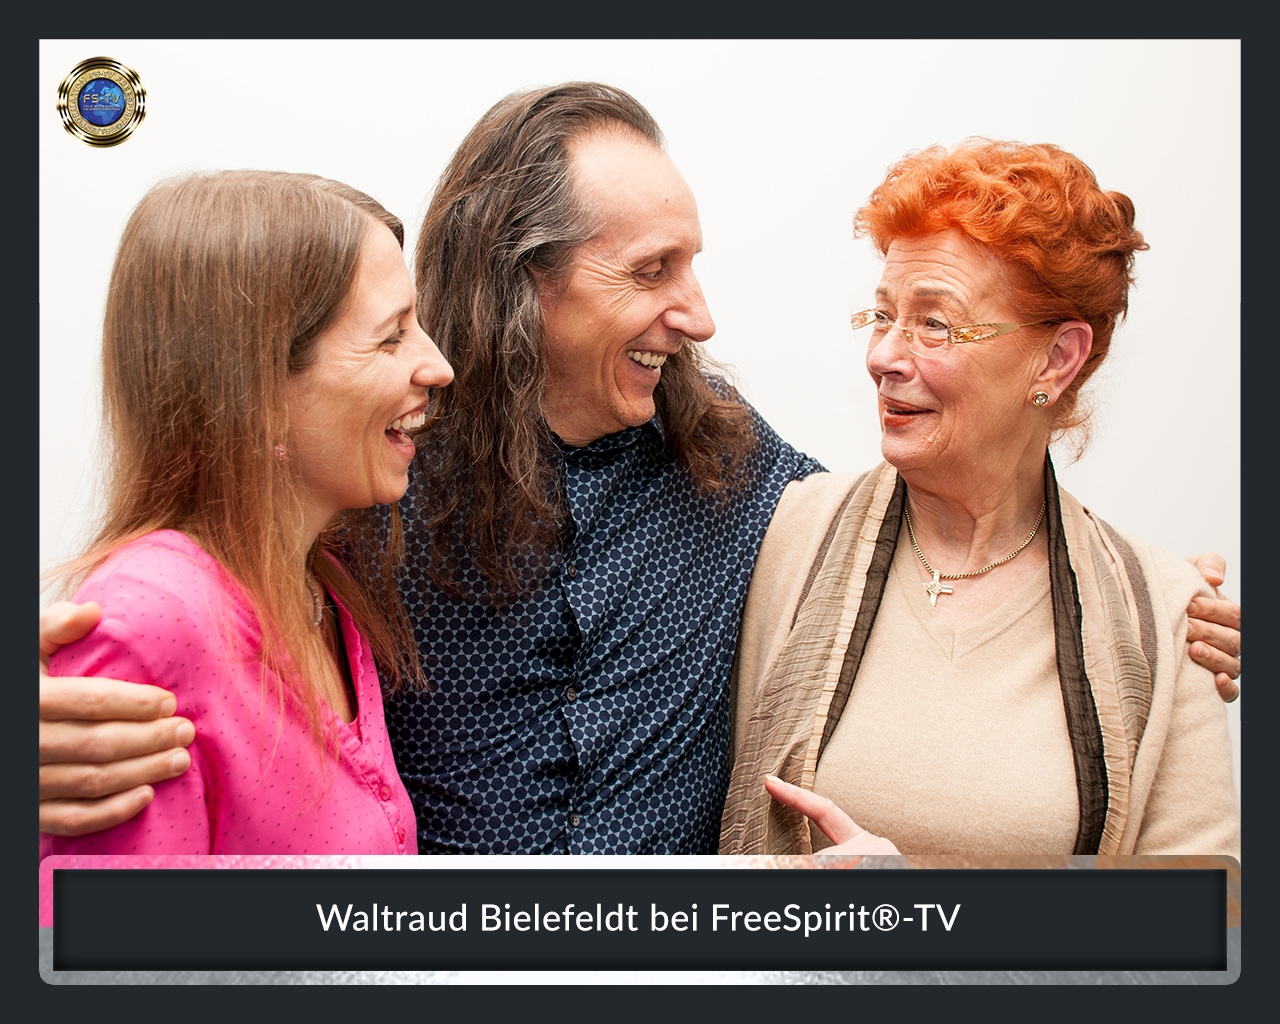 FS-TV-Bildergallerie-Waltraud-Bielefeldt-6